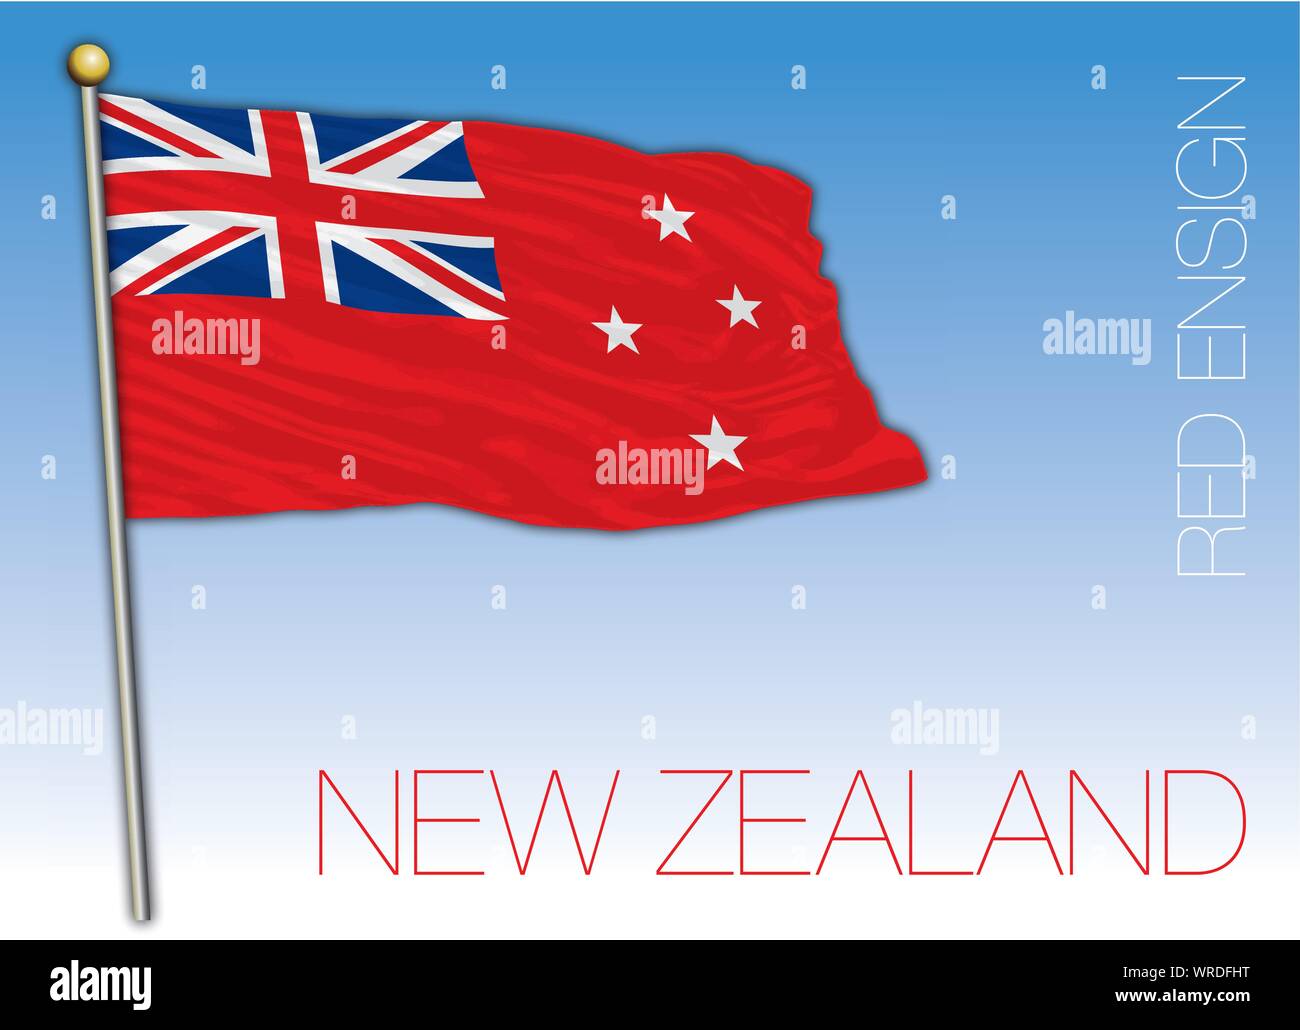 New Zealand red ensign flag, vector illustration Stock Vector